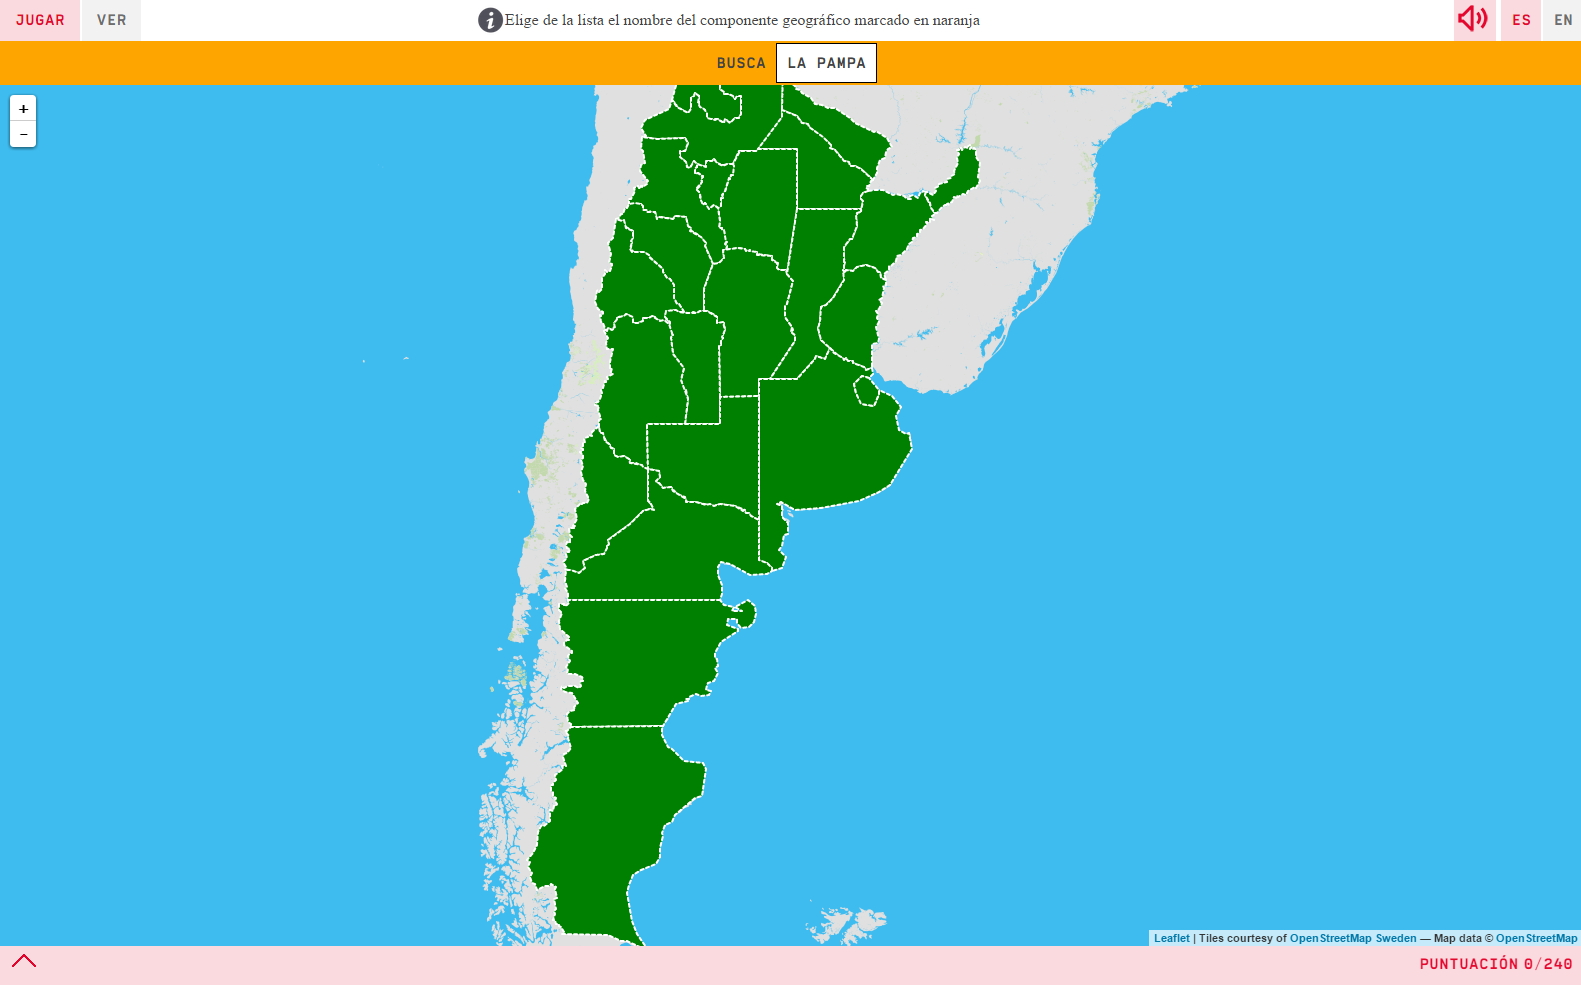 Provinces of Argentina